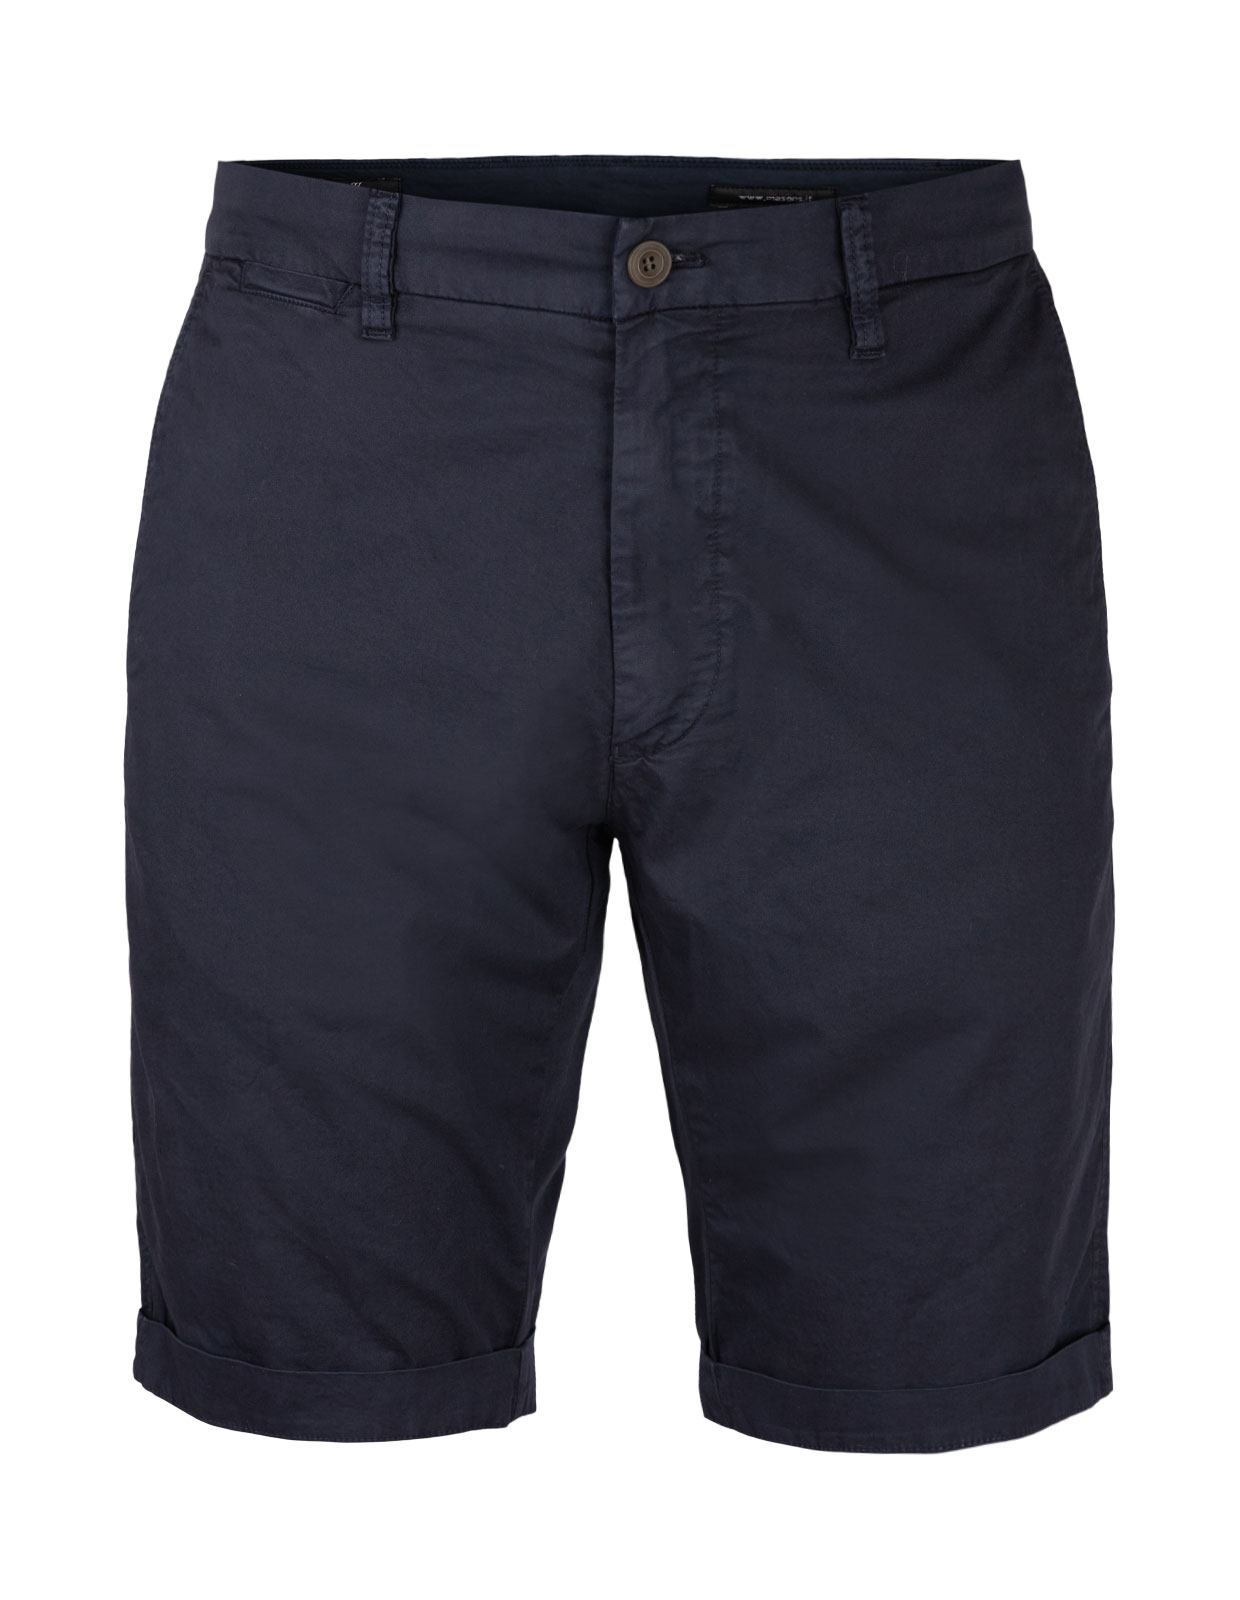 London Basic Shorts Cotton Stretch Blue Navy